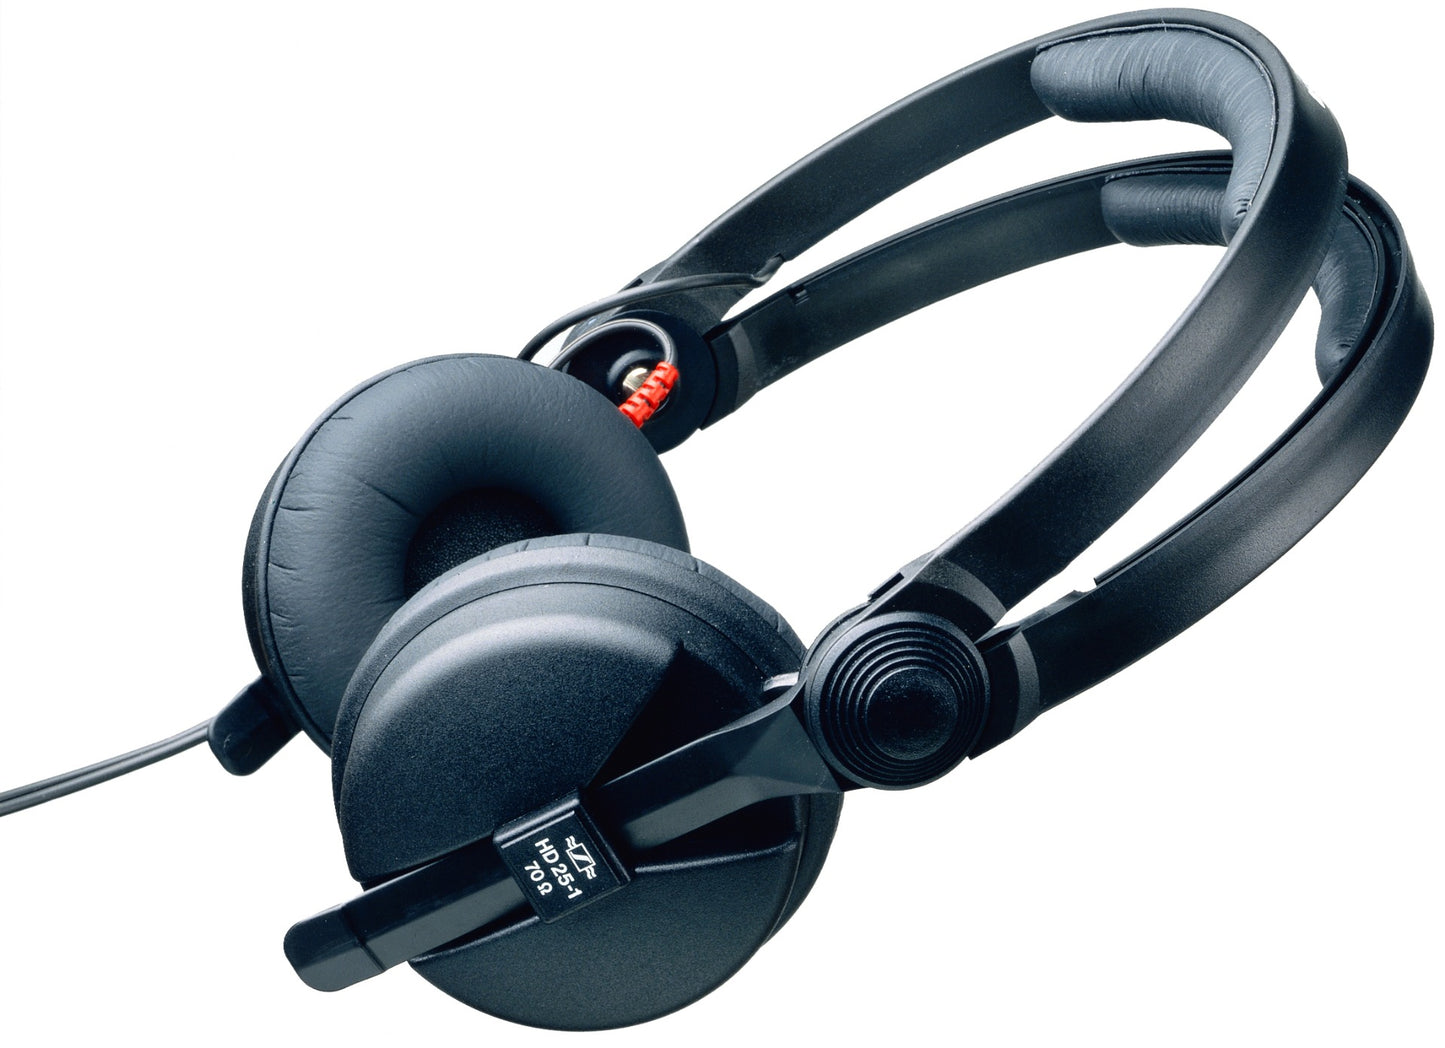 Sennheiser HD 25 PLUS On-ear closed back Monitor DJ Headphones